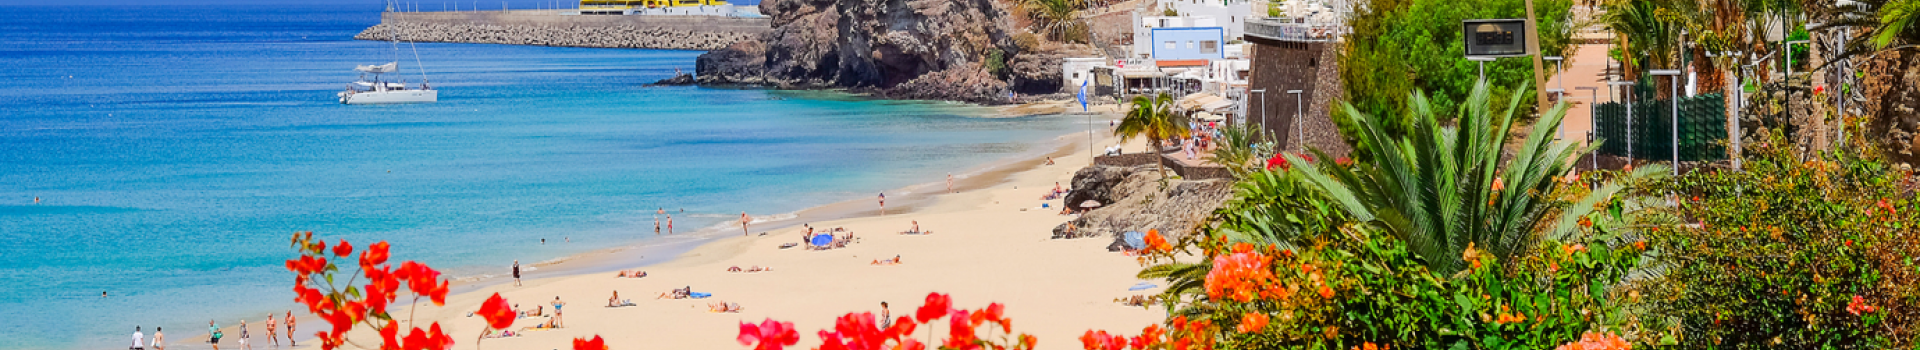 Last Minute Holidays to Fuerteventura with Cassidy Travel | Ireland's ...